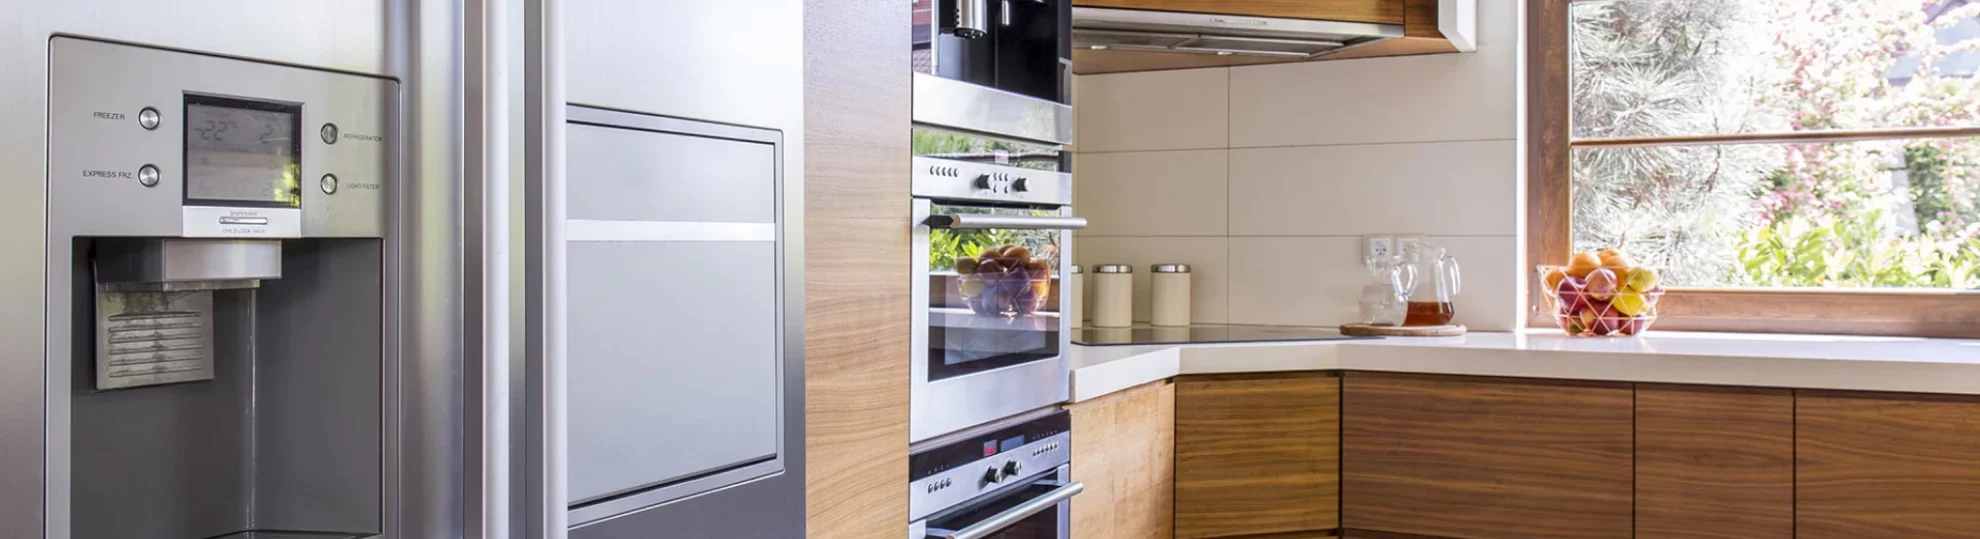 kitchen with refrigerator and oven amhurst ny